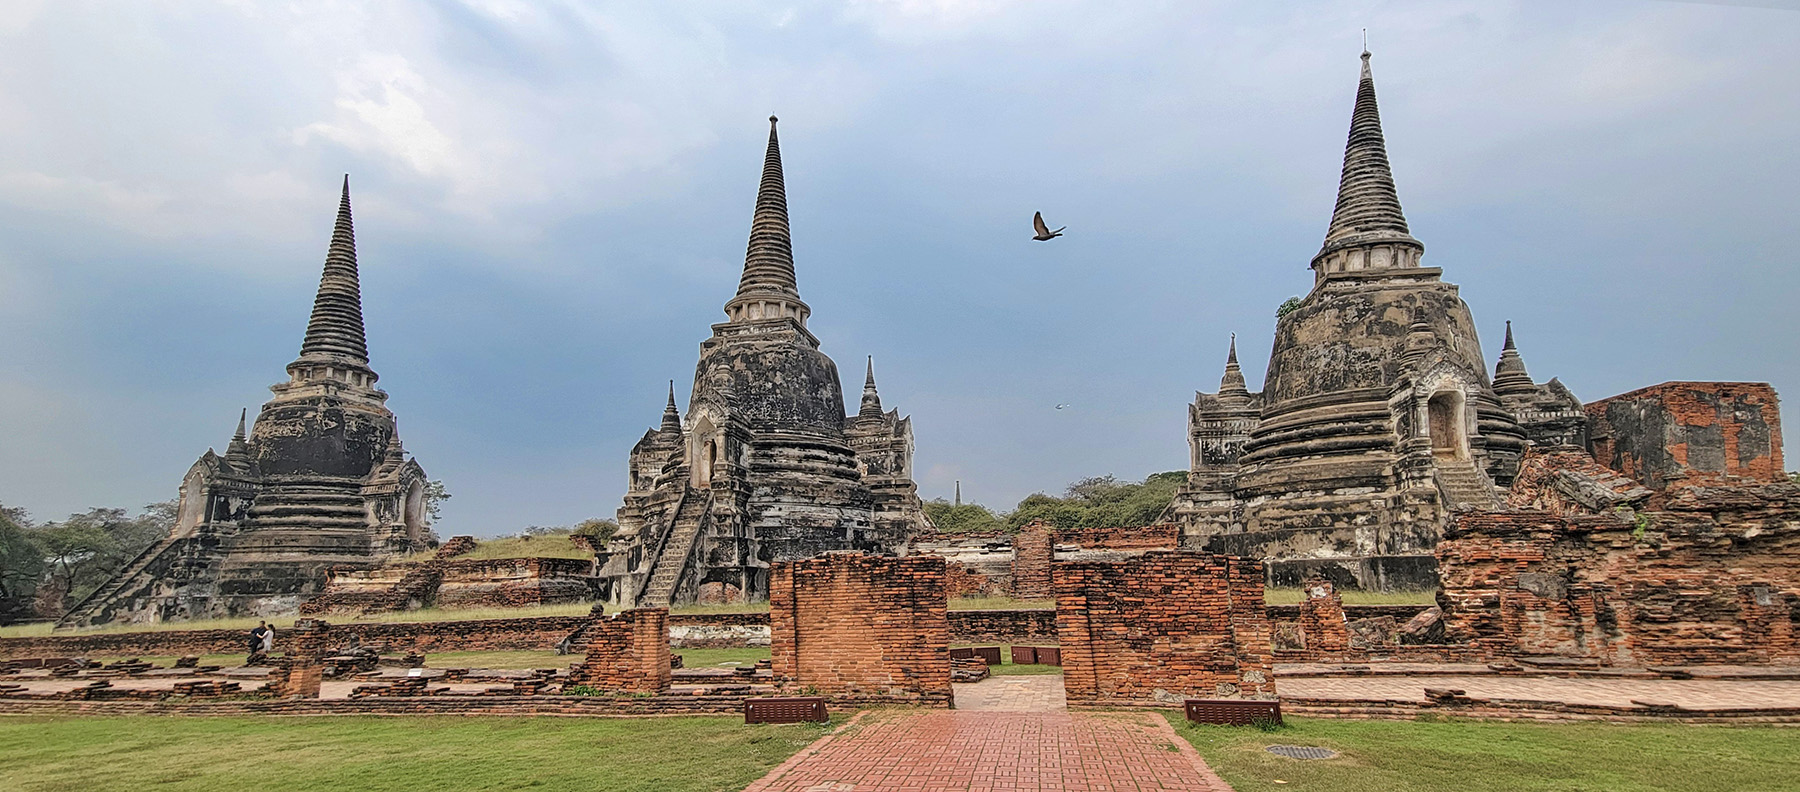 Three shrines in Ayutthaya, Thailand